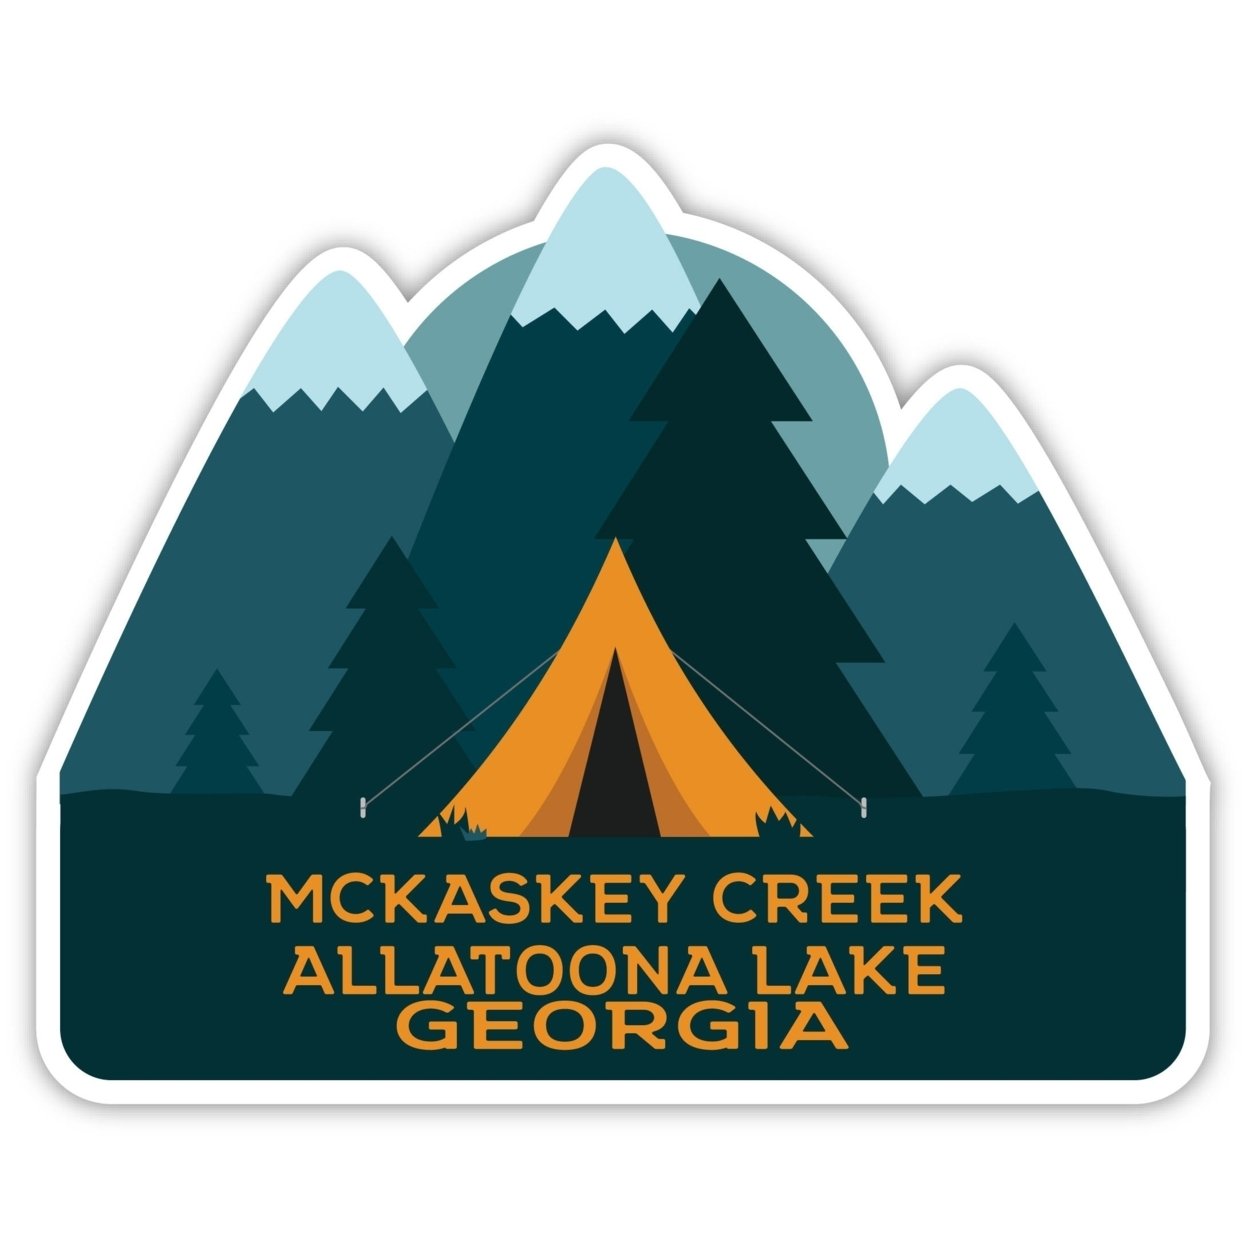 Mckaskey Creek Allatoona Lake Georgia Souvenir Decorative Stickers (Choose Theme And Size) - 2-Inch, Tent